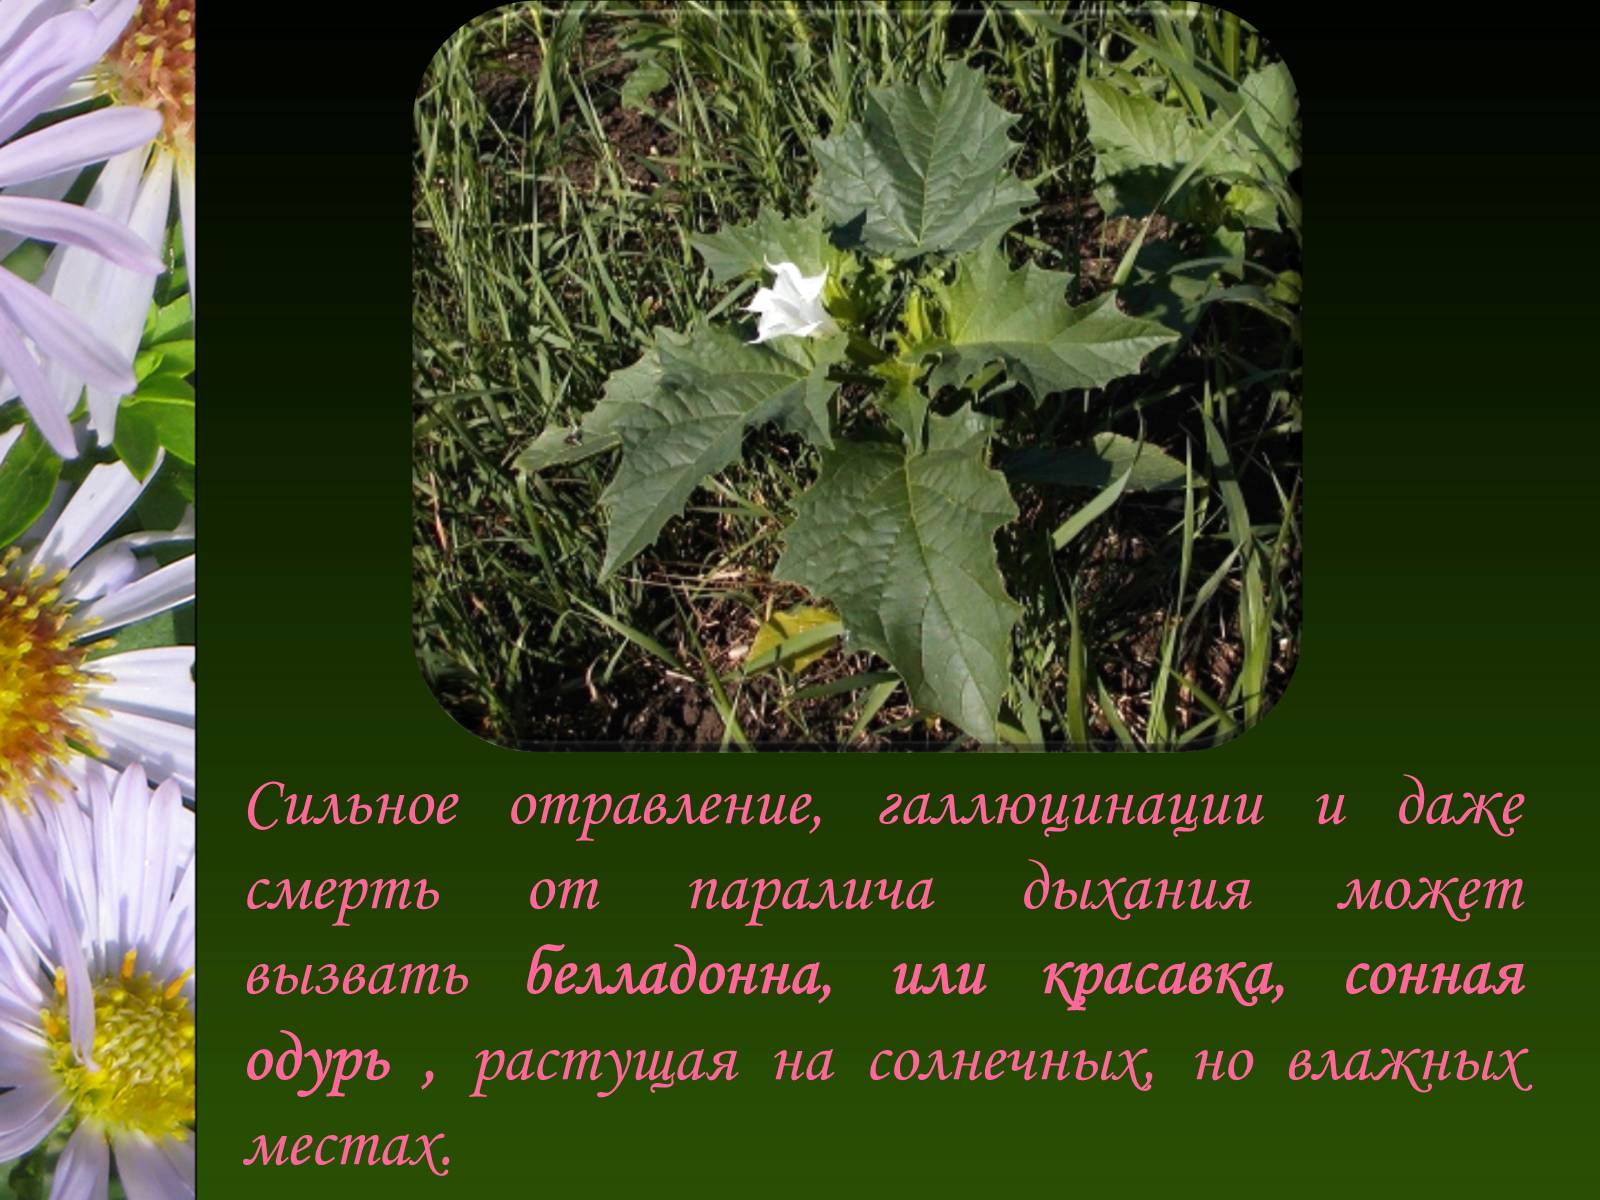 Презентація на тему «Ядовитые растения Украины» - Слайд #21